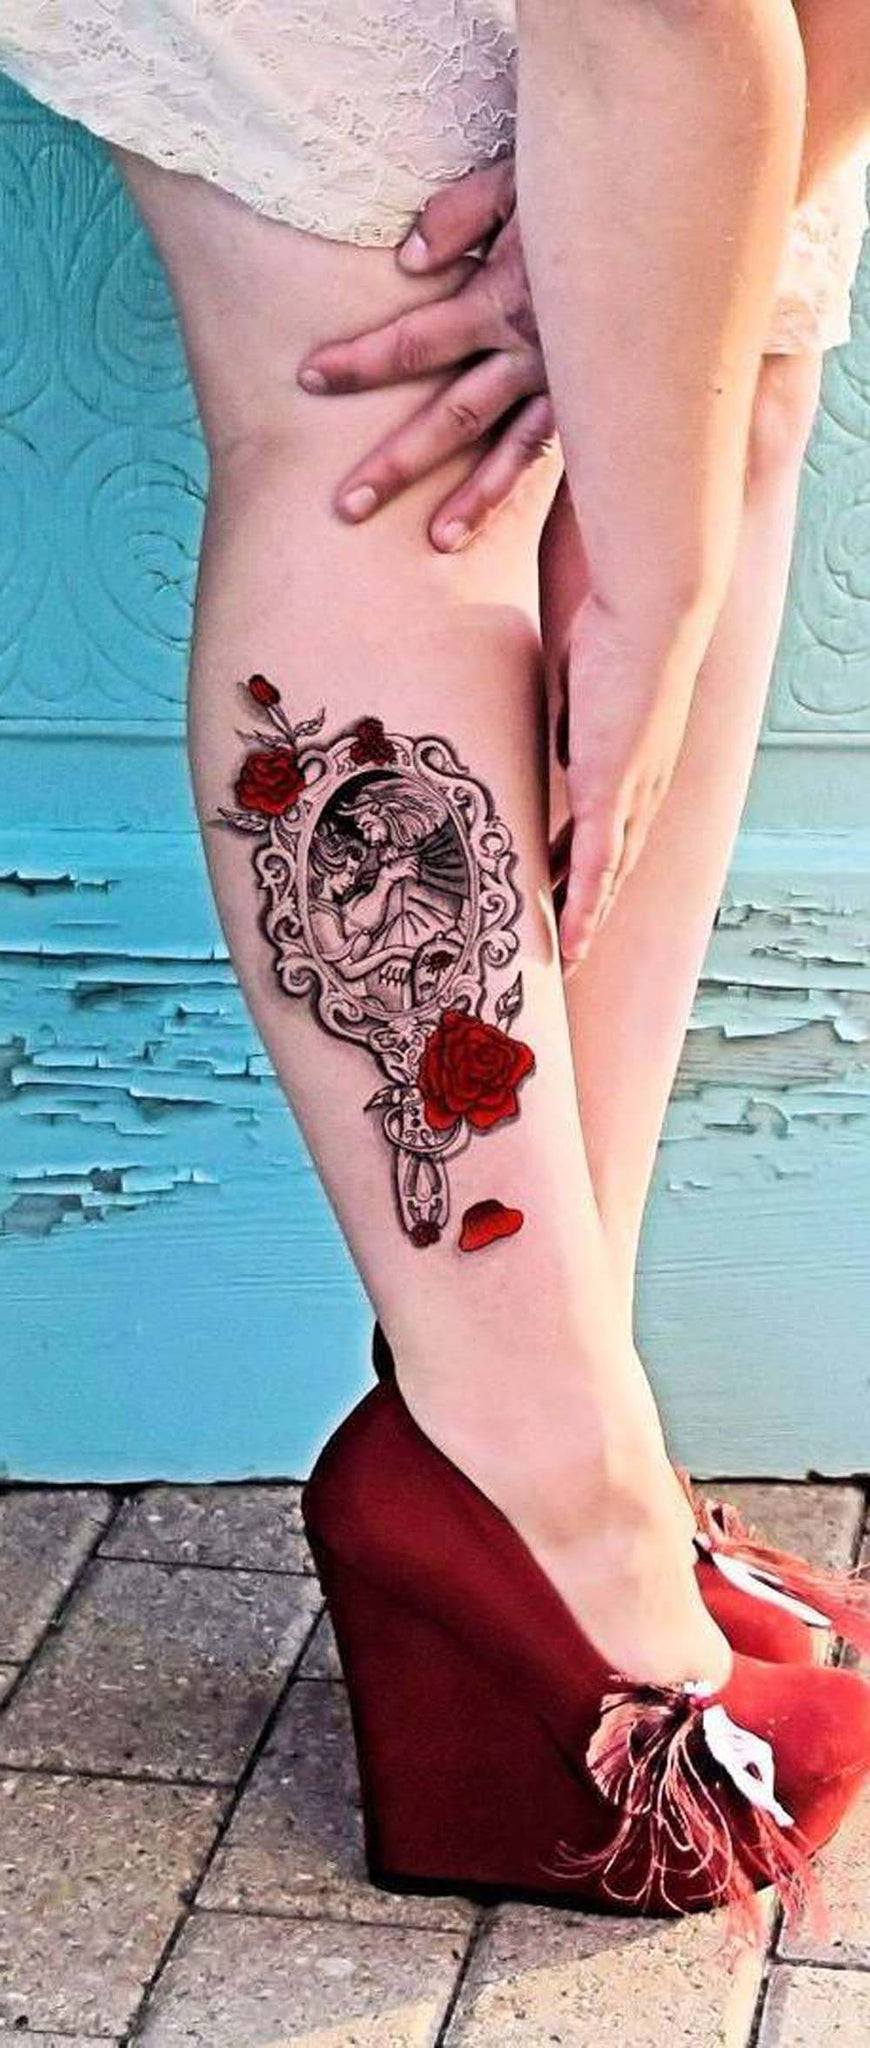 Beauty and the Beast Mirror Rose Calf Leg Tattoo Ideas for Women -  ideas de tatuaje de flor de becerro de ternera - www.MyBodiArt.com